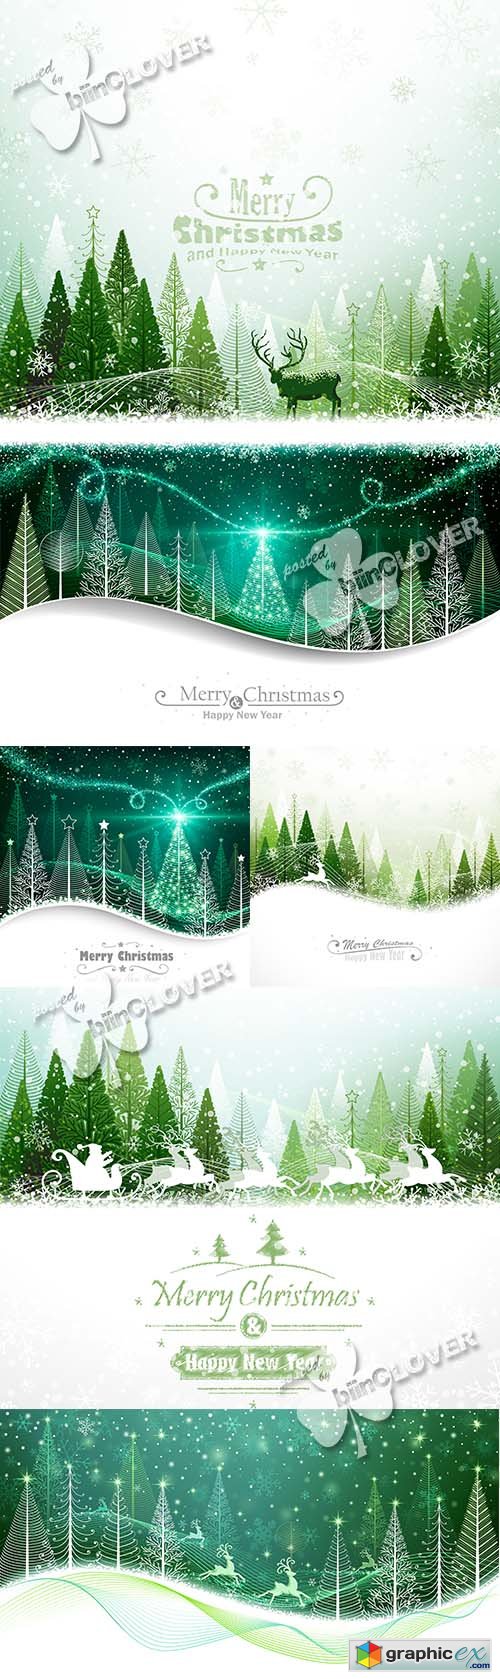 Vector Merry Christmas cards